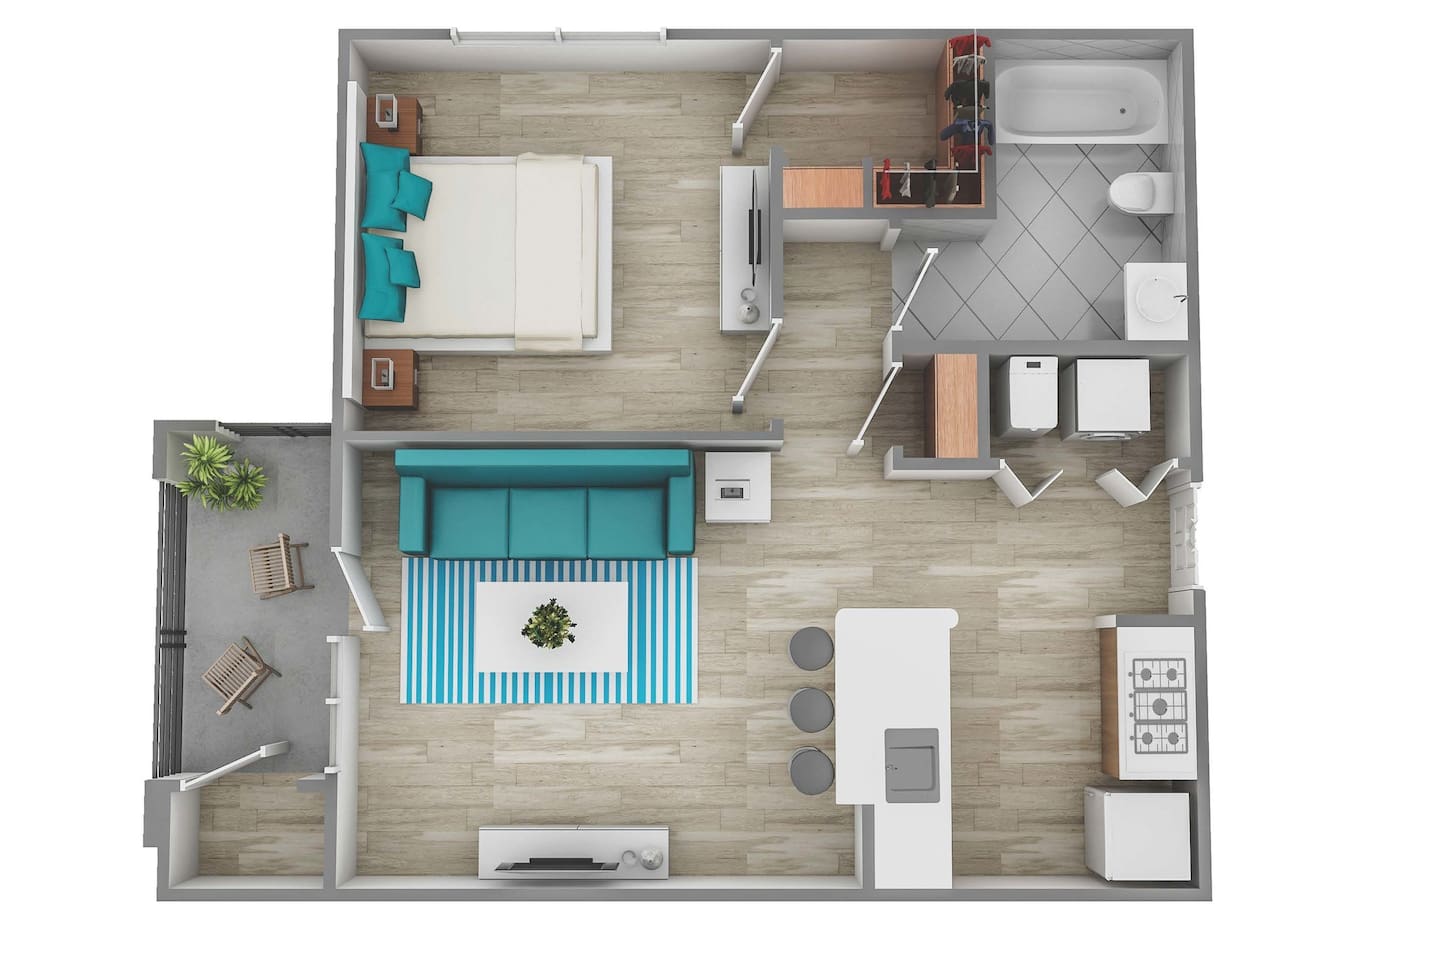 Floorplan diagram for One Bedroom One Bath (579 SF), showing 1 bedroom